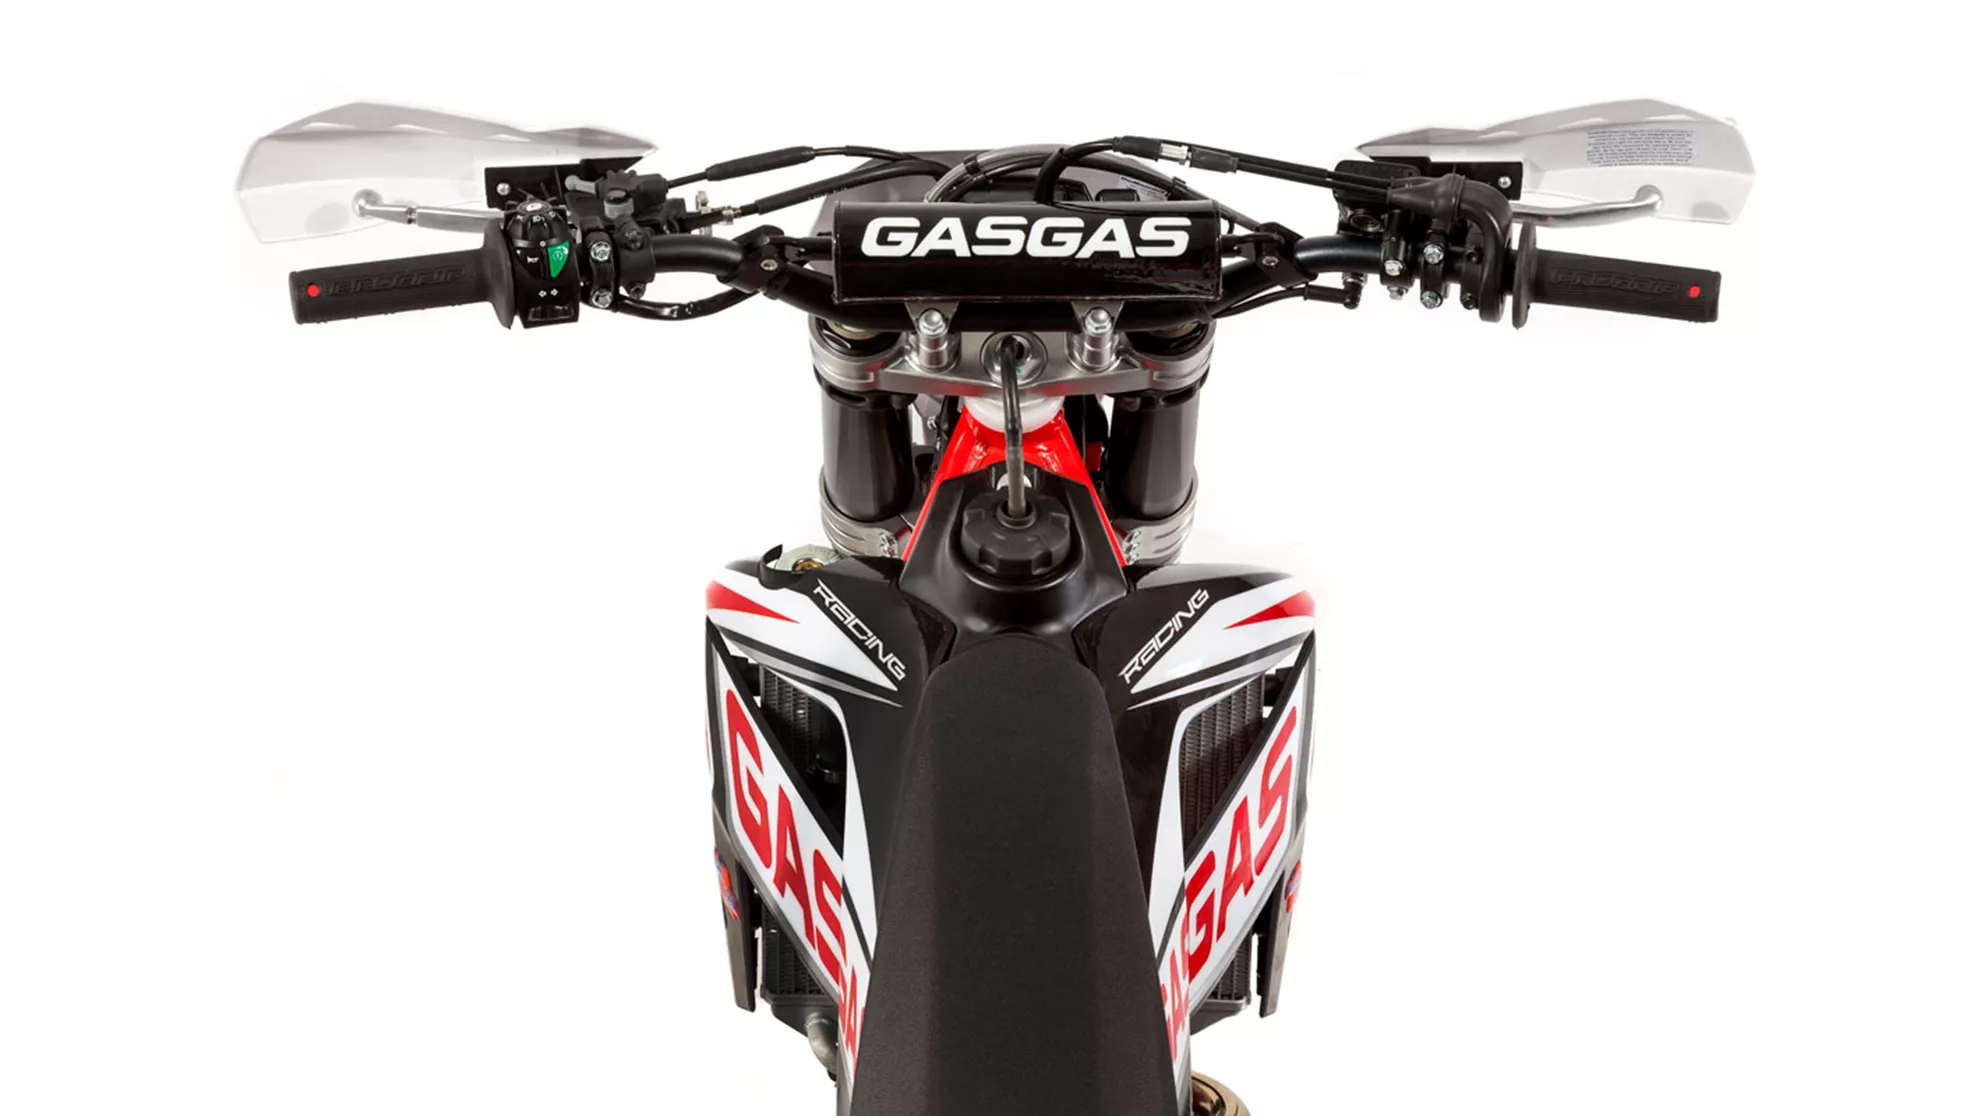 GASGAS EC 300 F Racing - Immagine 11